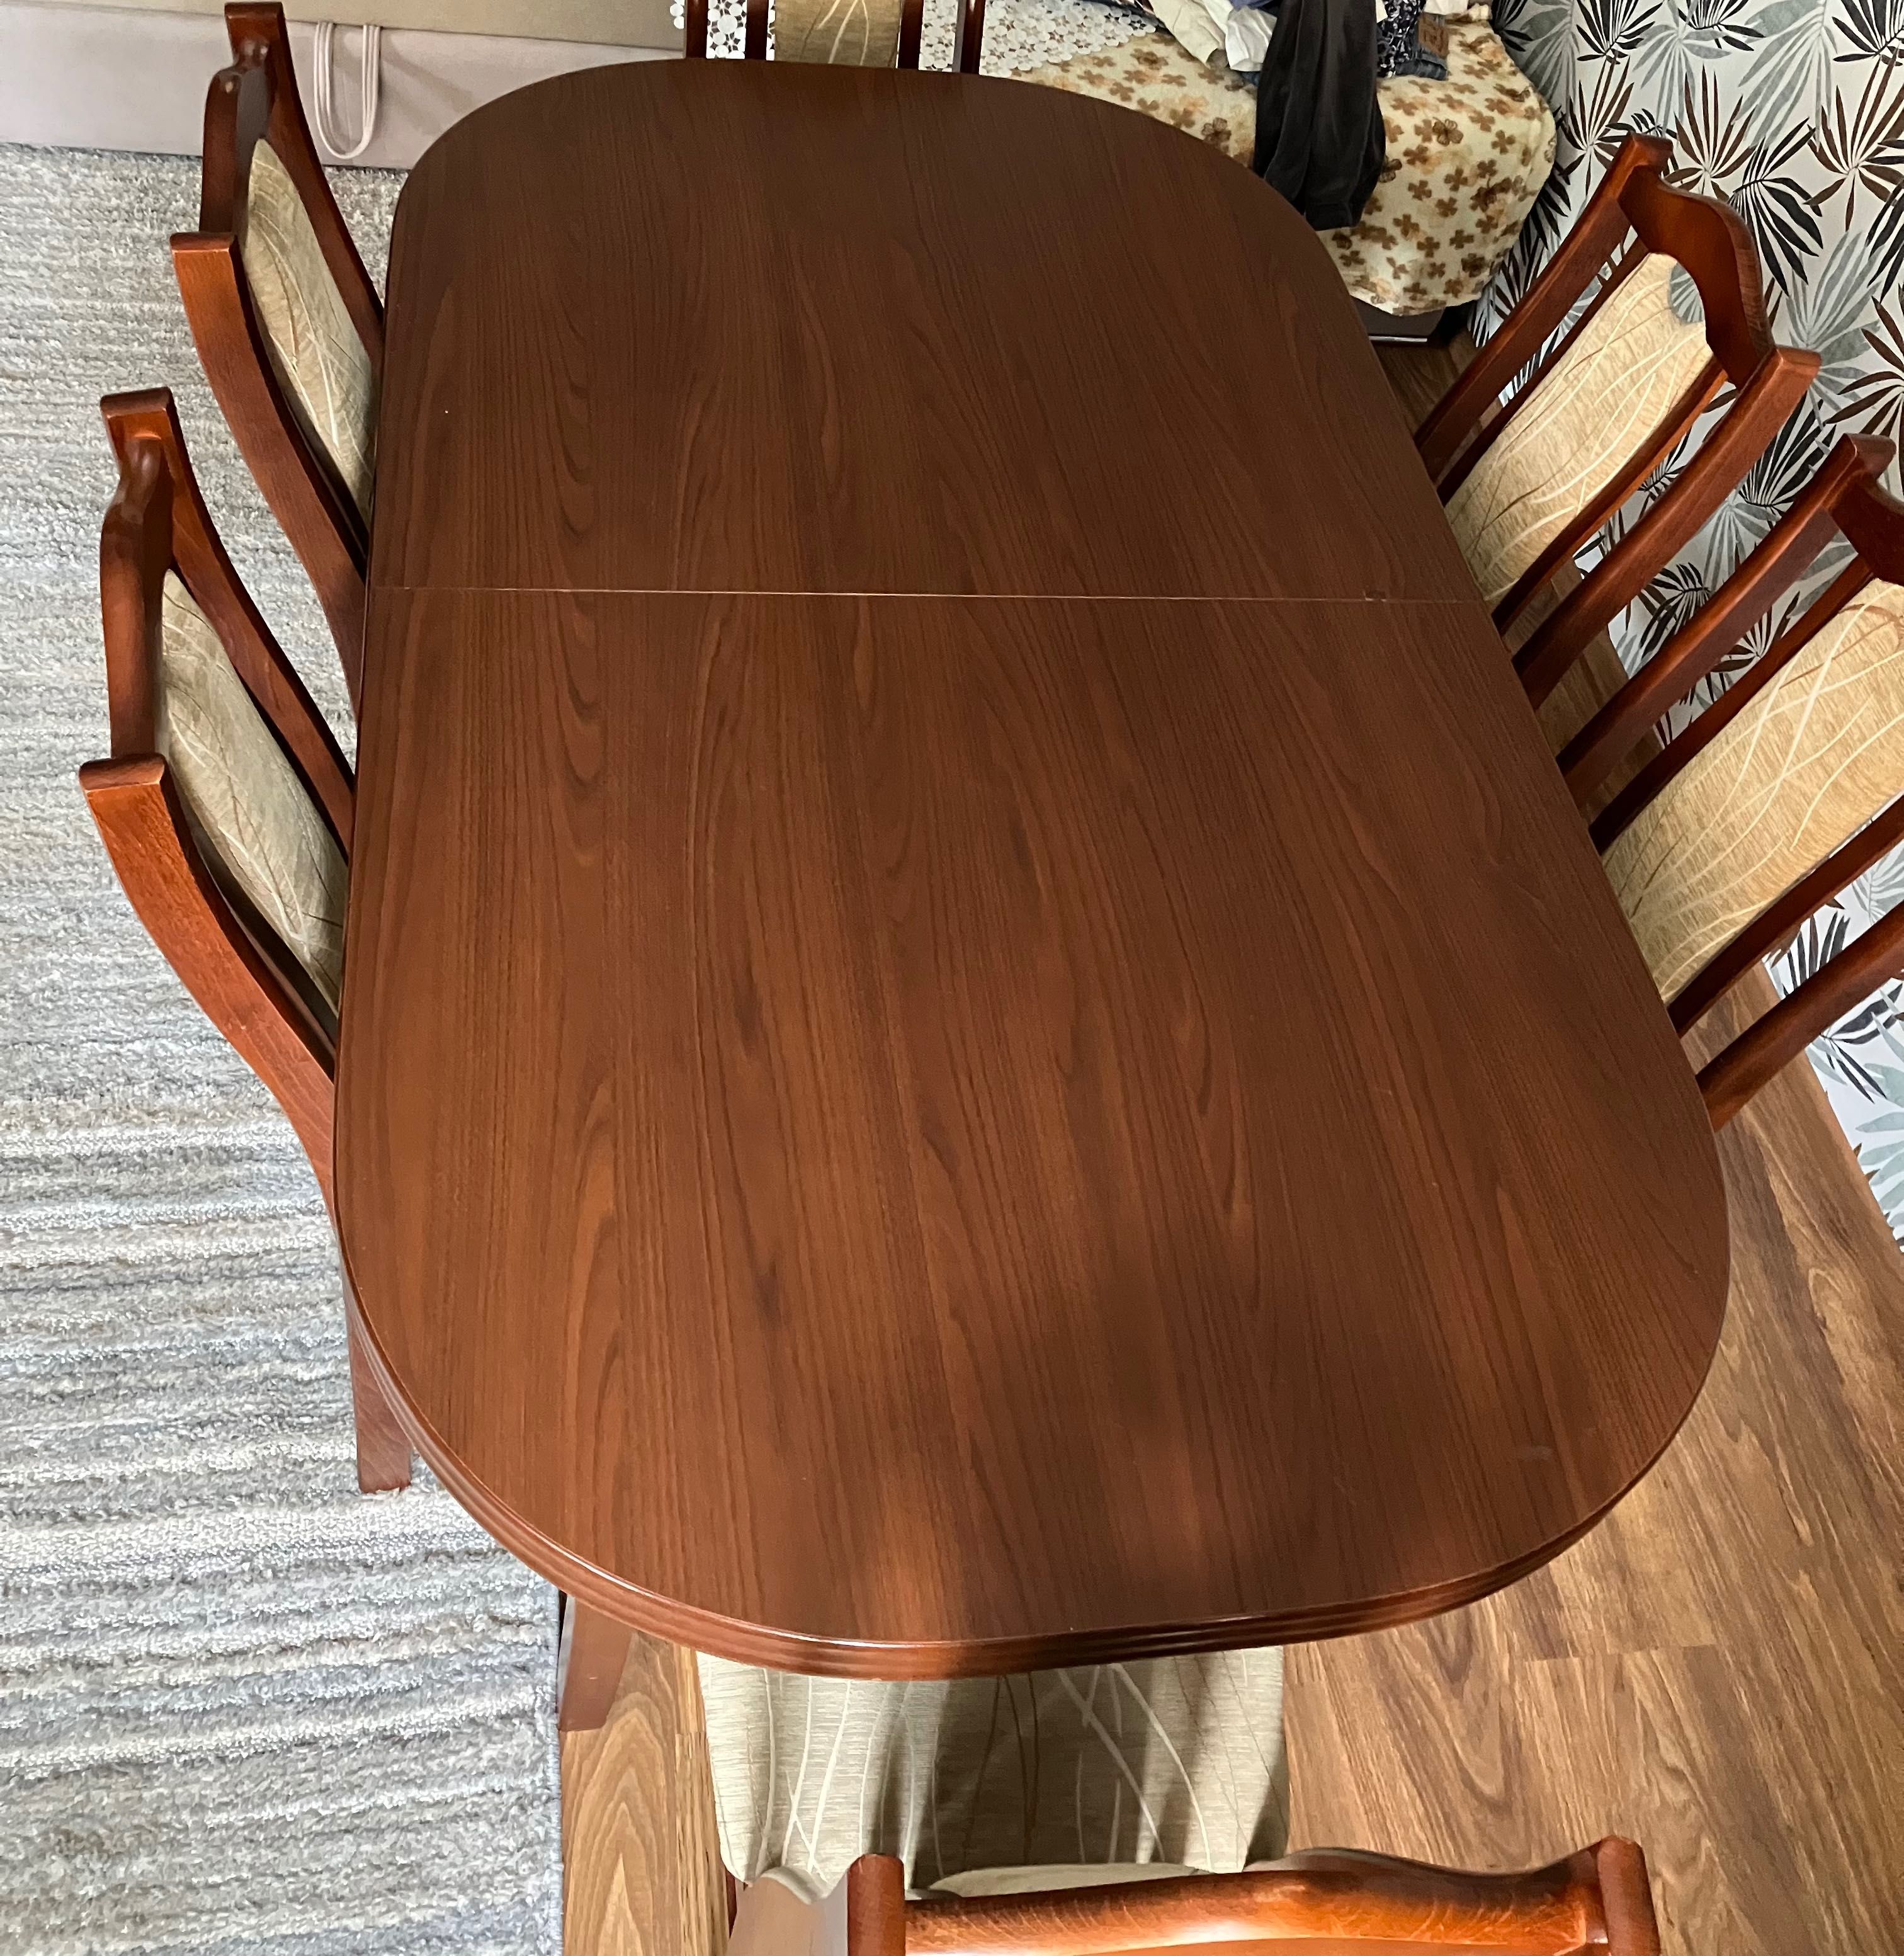 Stół jadalniany z kompletem krzeseł